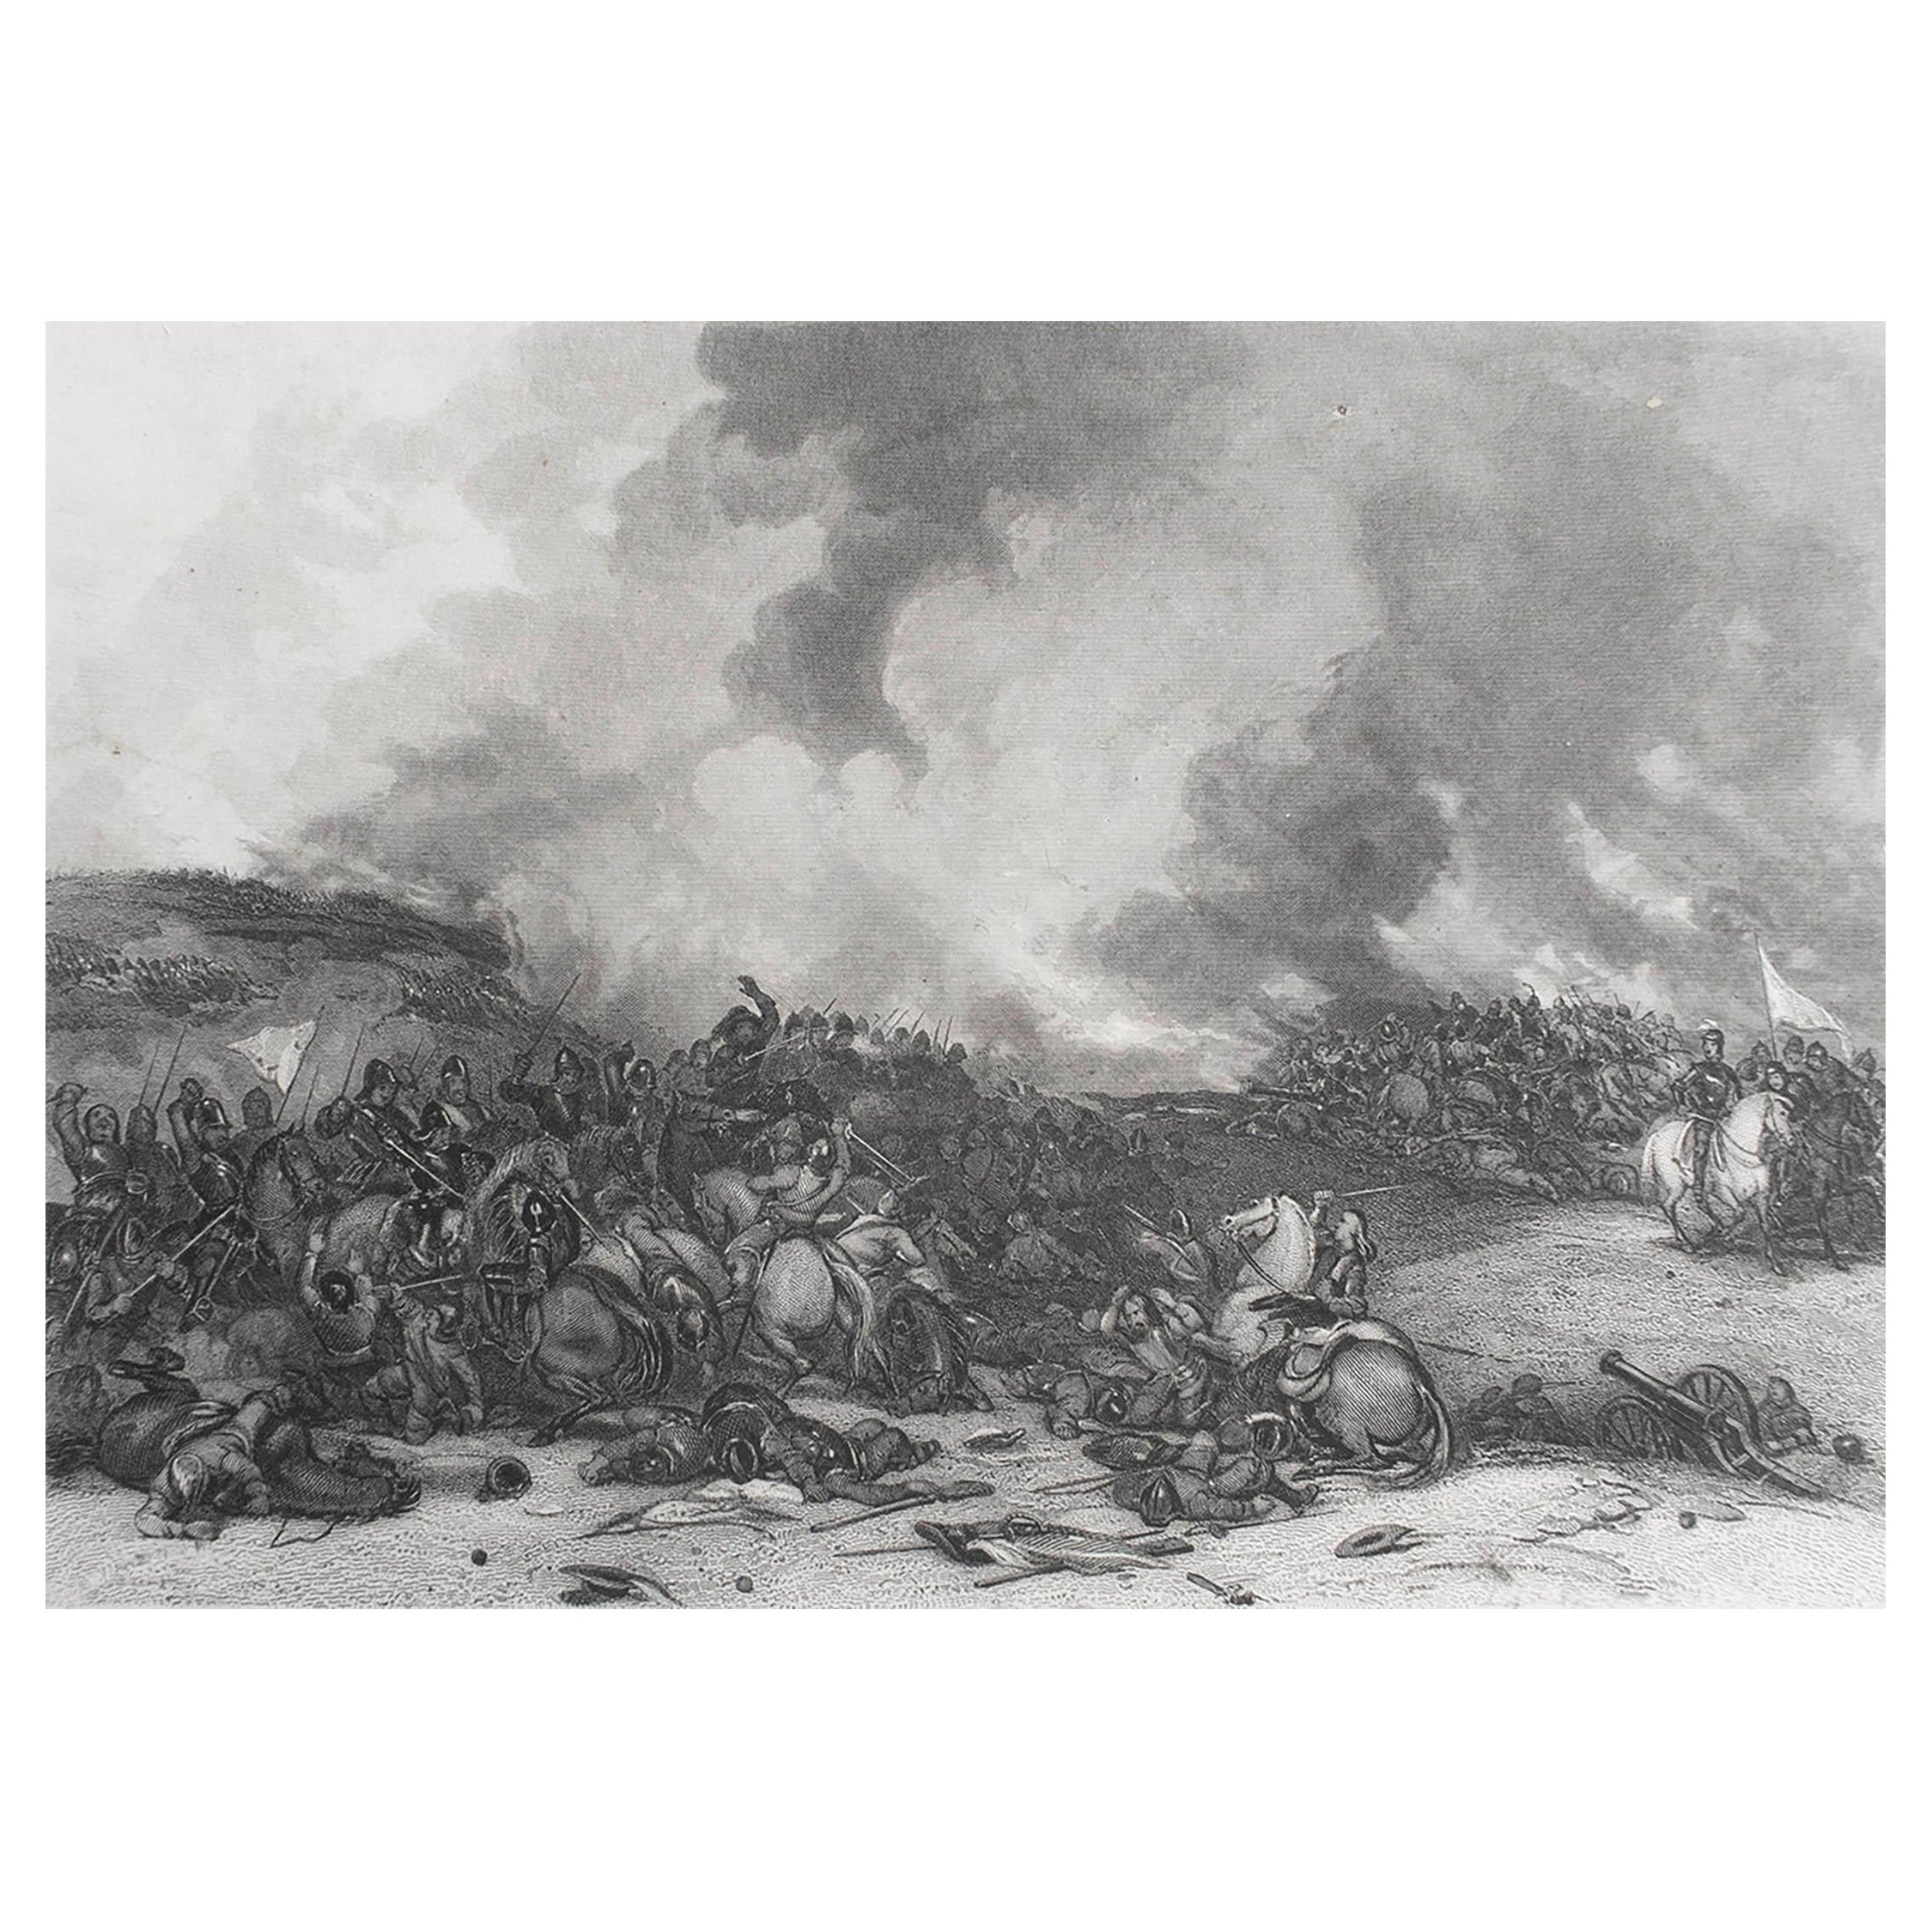 Original Antique Print of The English Civil War- Naseby. C.1870